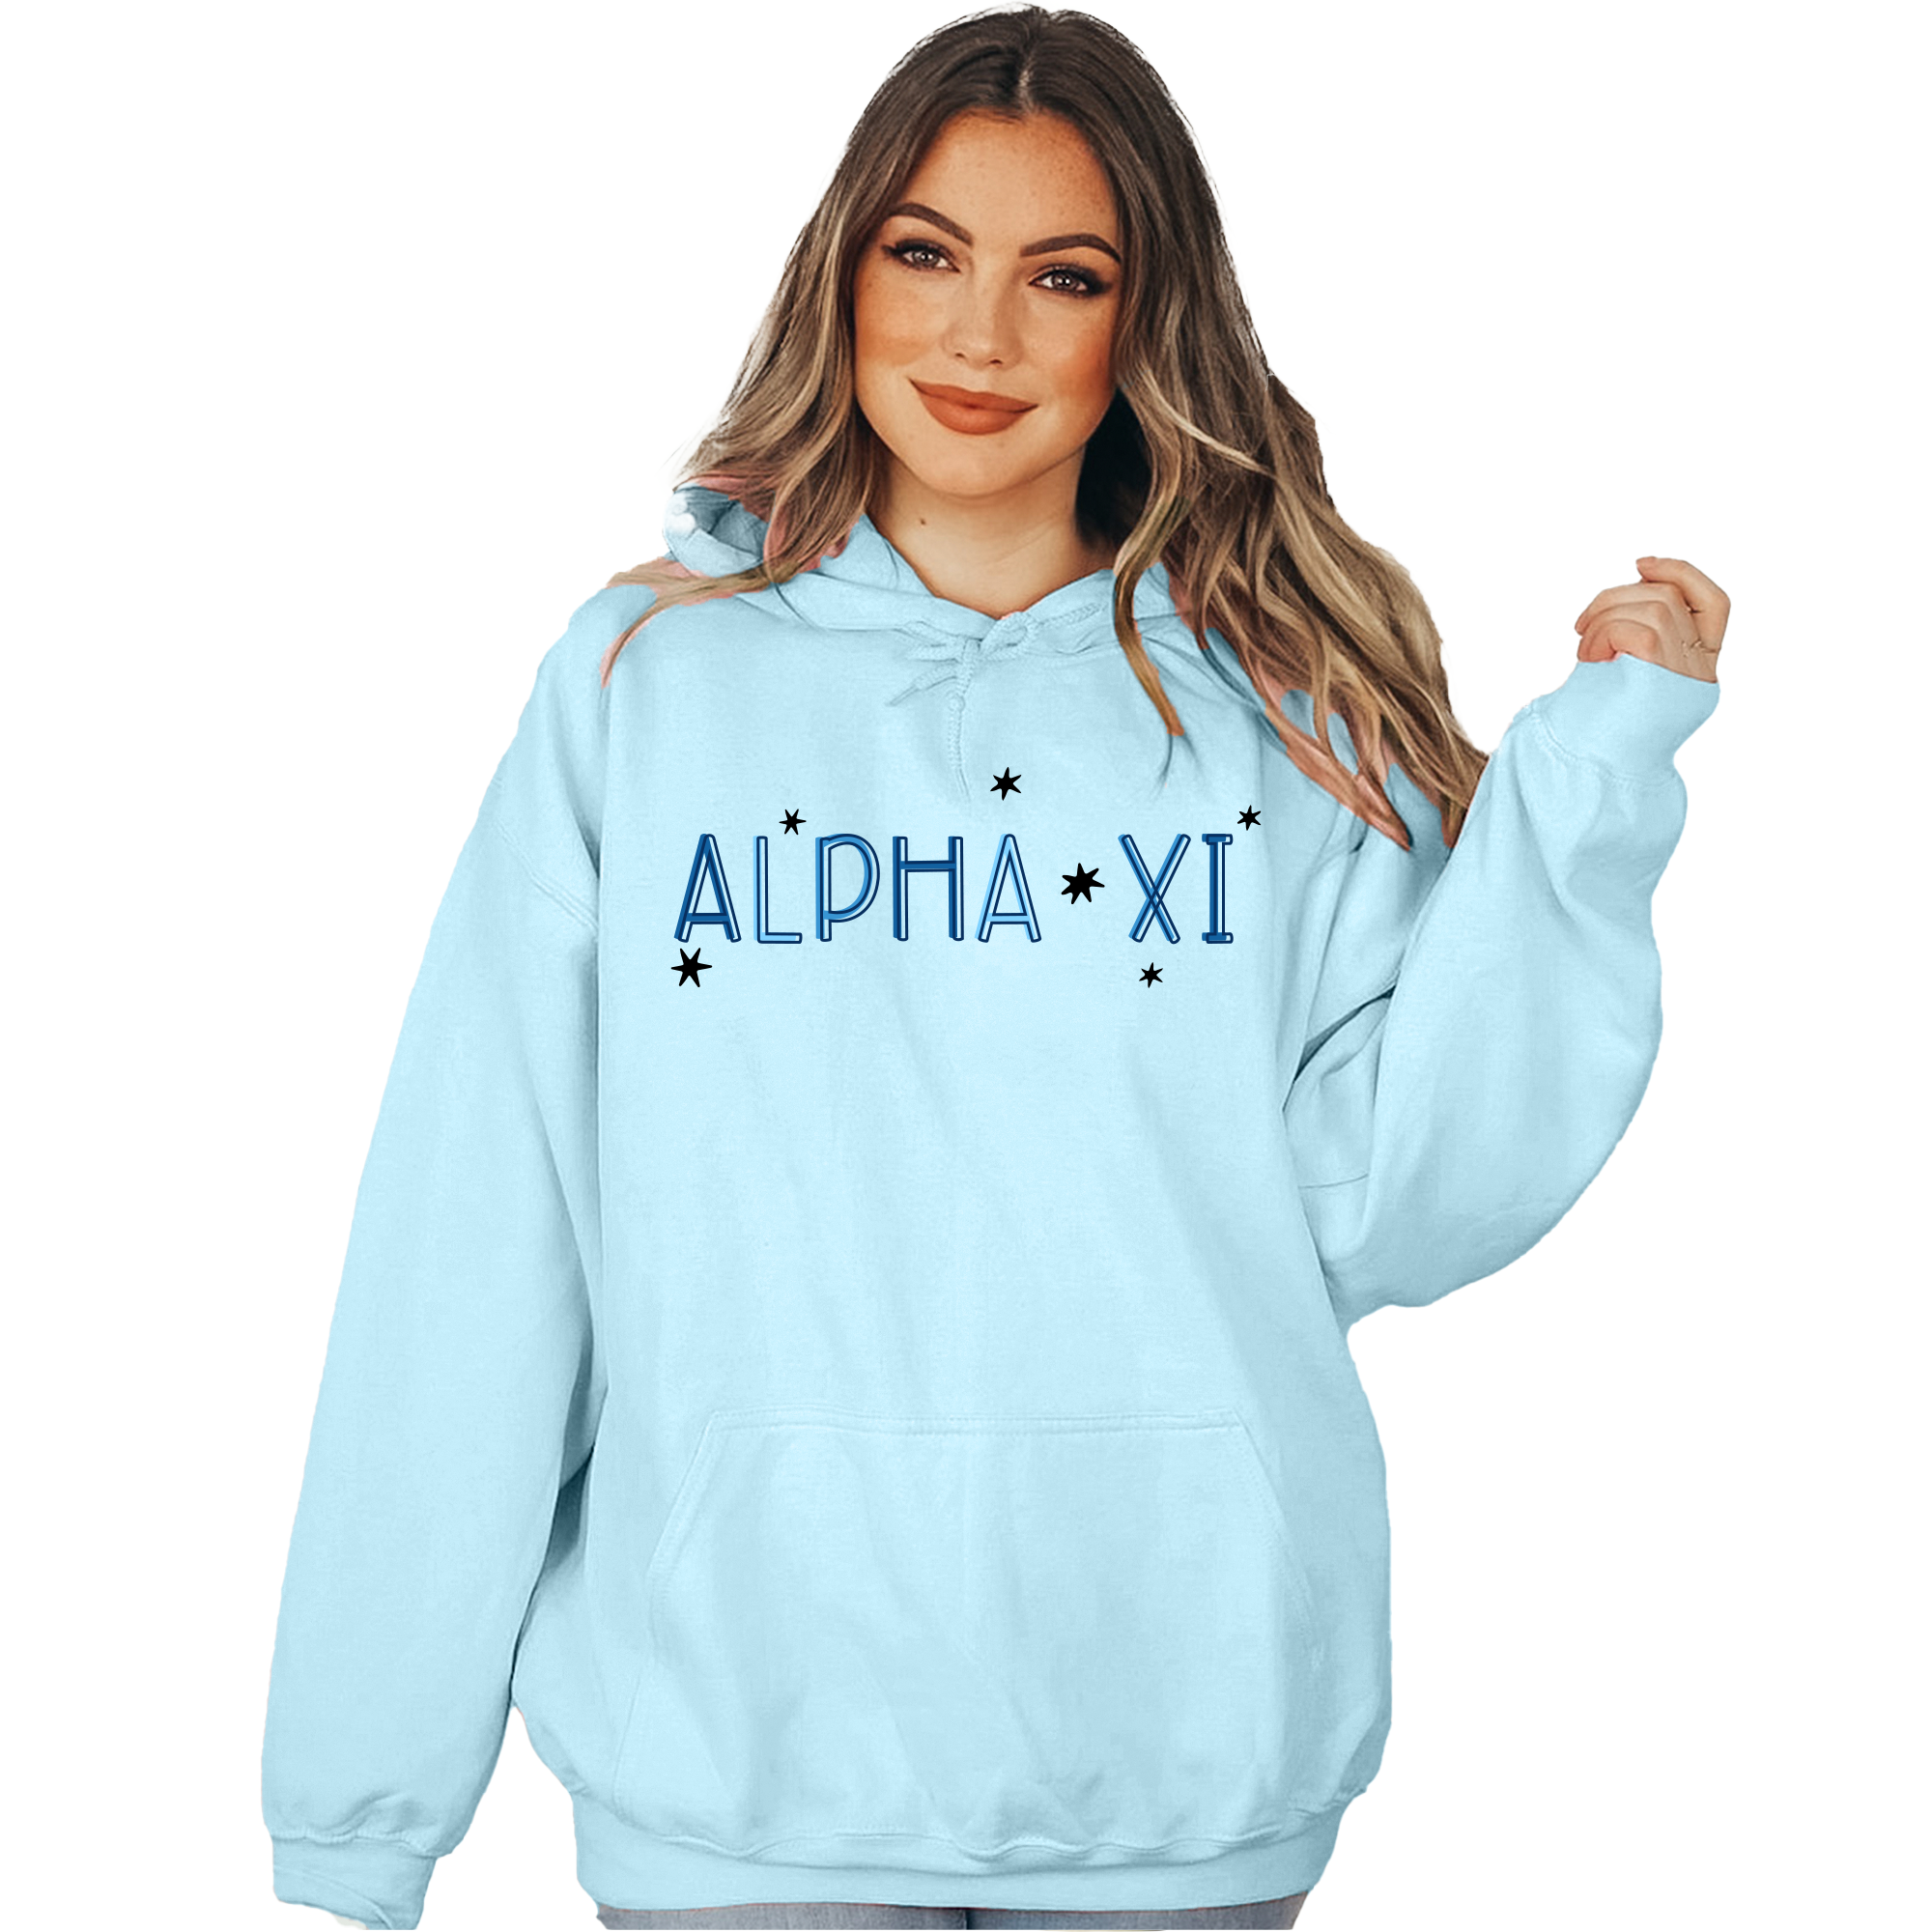 Alpha Xi Delta Hoodie - Sparkle, Blue Hoodie, Greek Apparel, Big Little Reveal, Initiation - Go Greek Chic